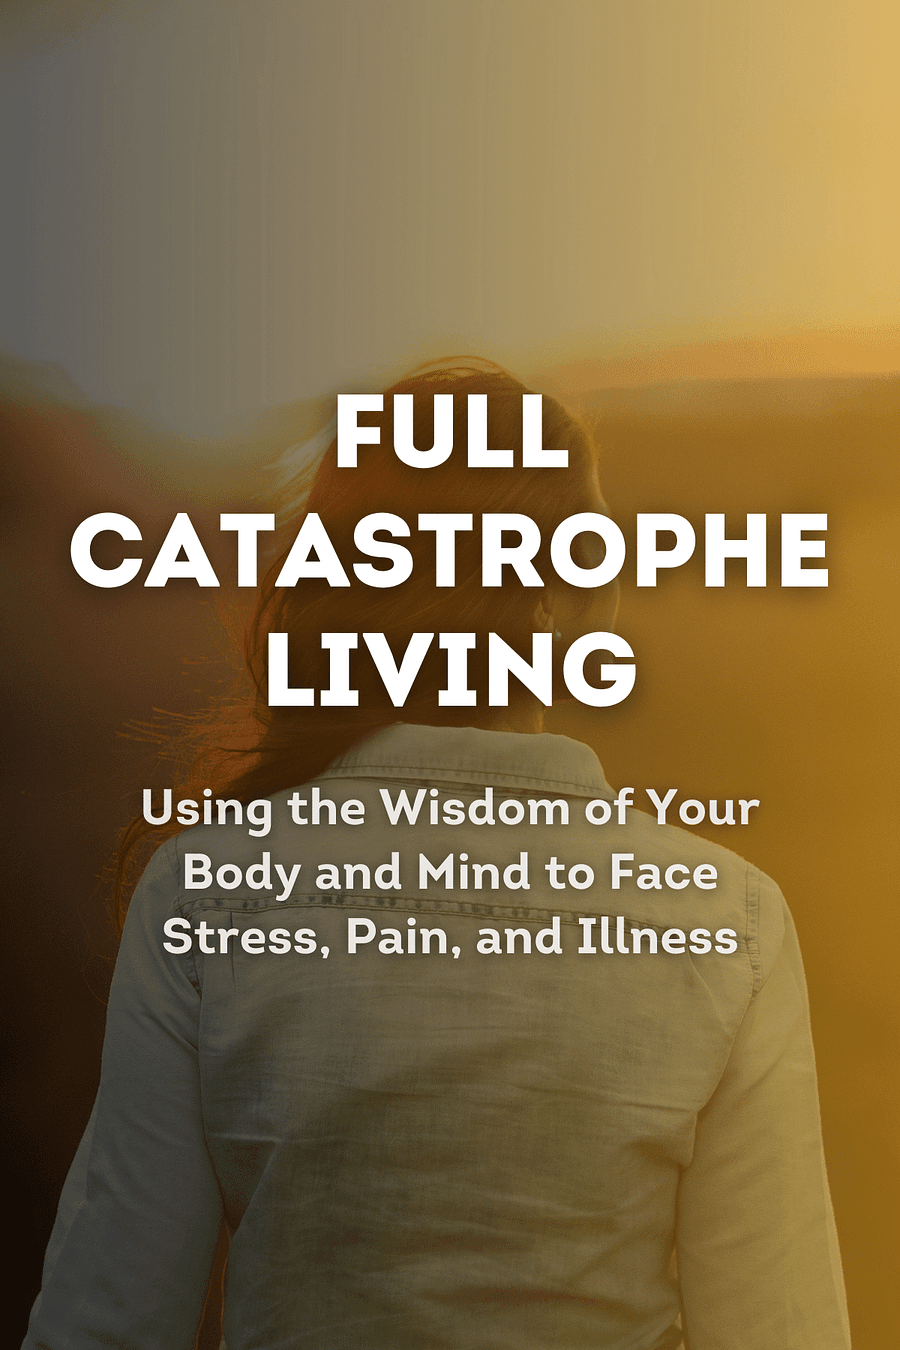 Full Catastrophe Living (Revised Edition) by Jon Kabat-Zinn - Book Summary